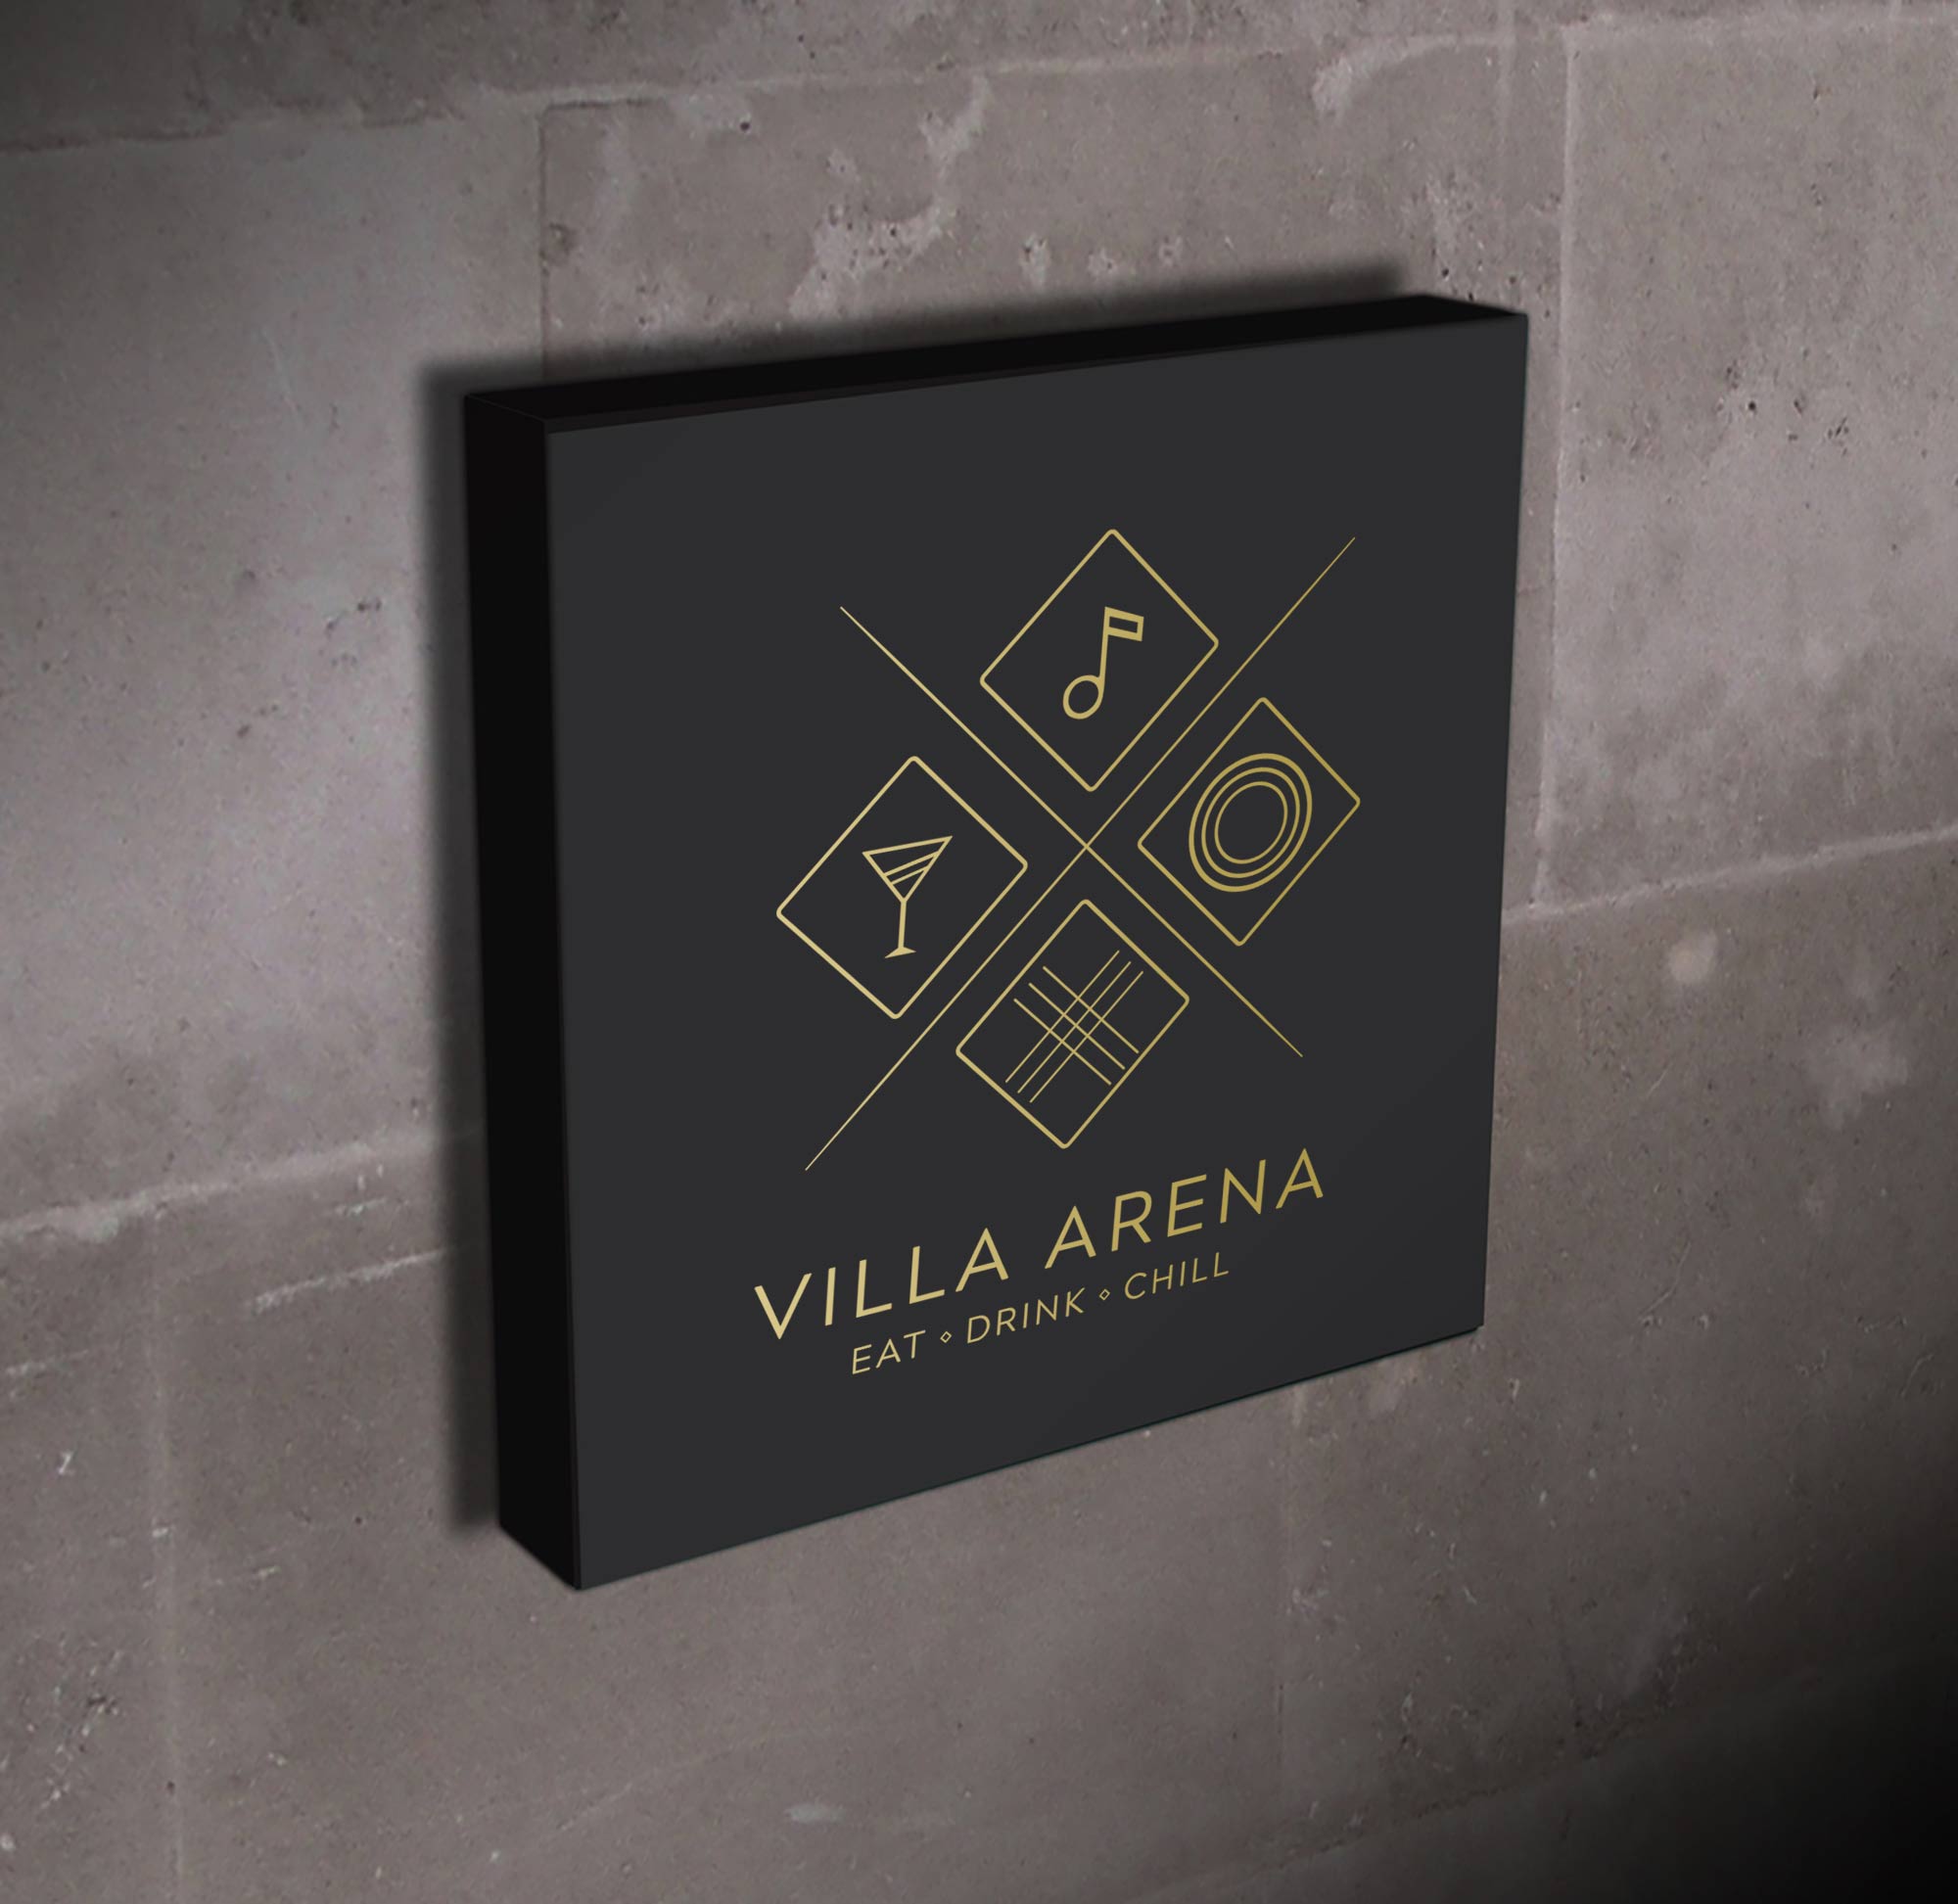 Villa Arena